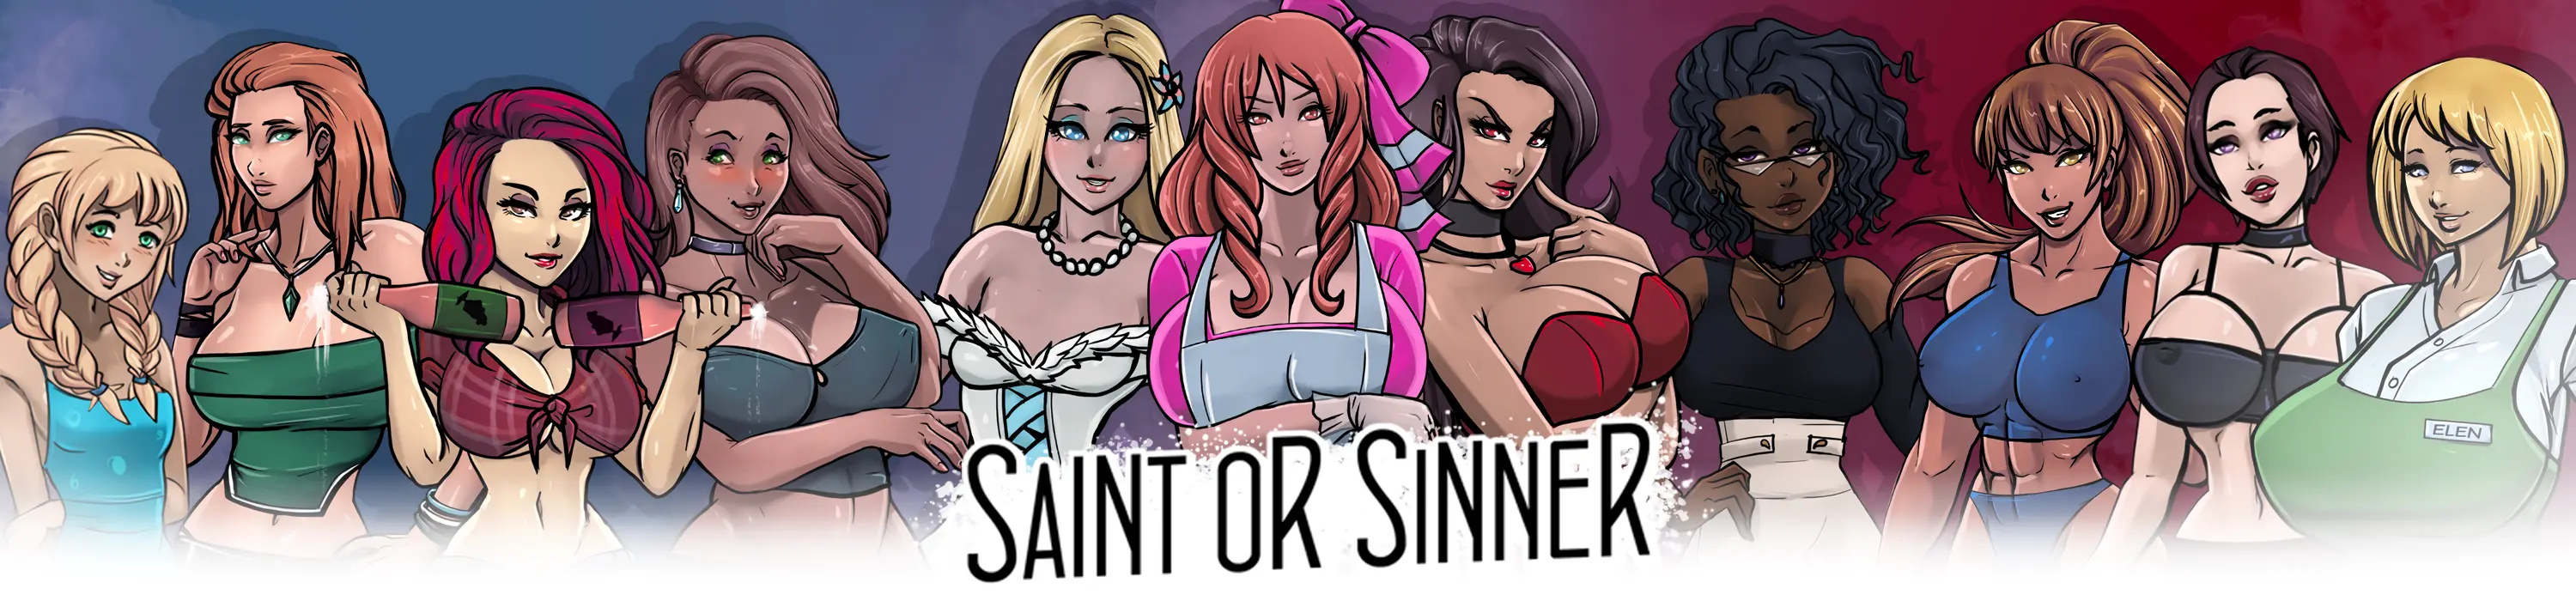 Saint or Sinner [v0.34] main image